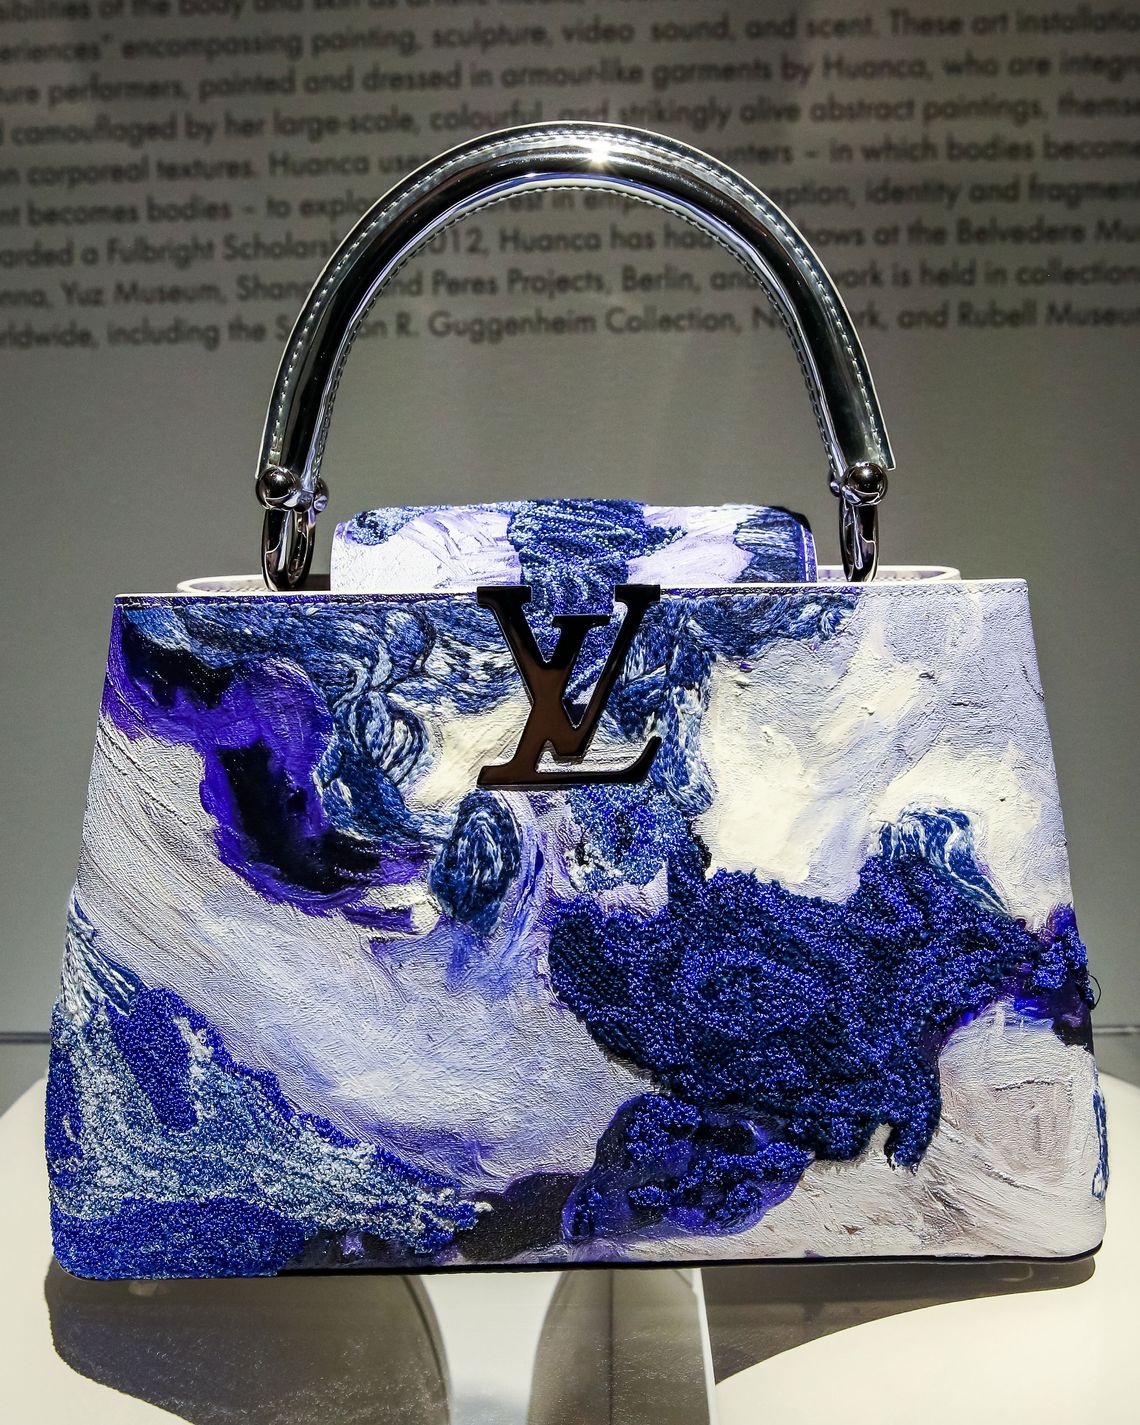 Artycapucines: 6 Artists Refashion The Louis Vuitton Capucines Bag